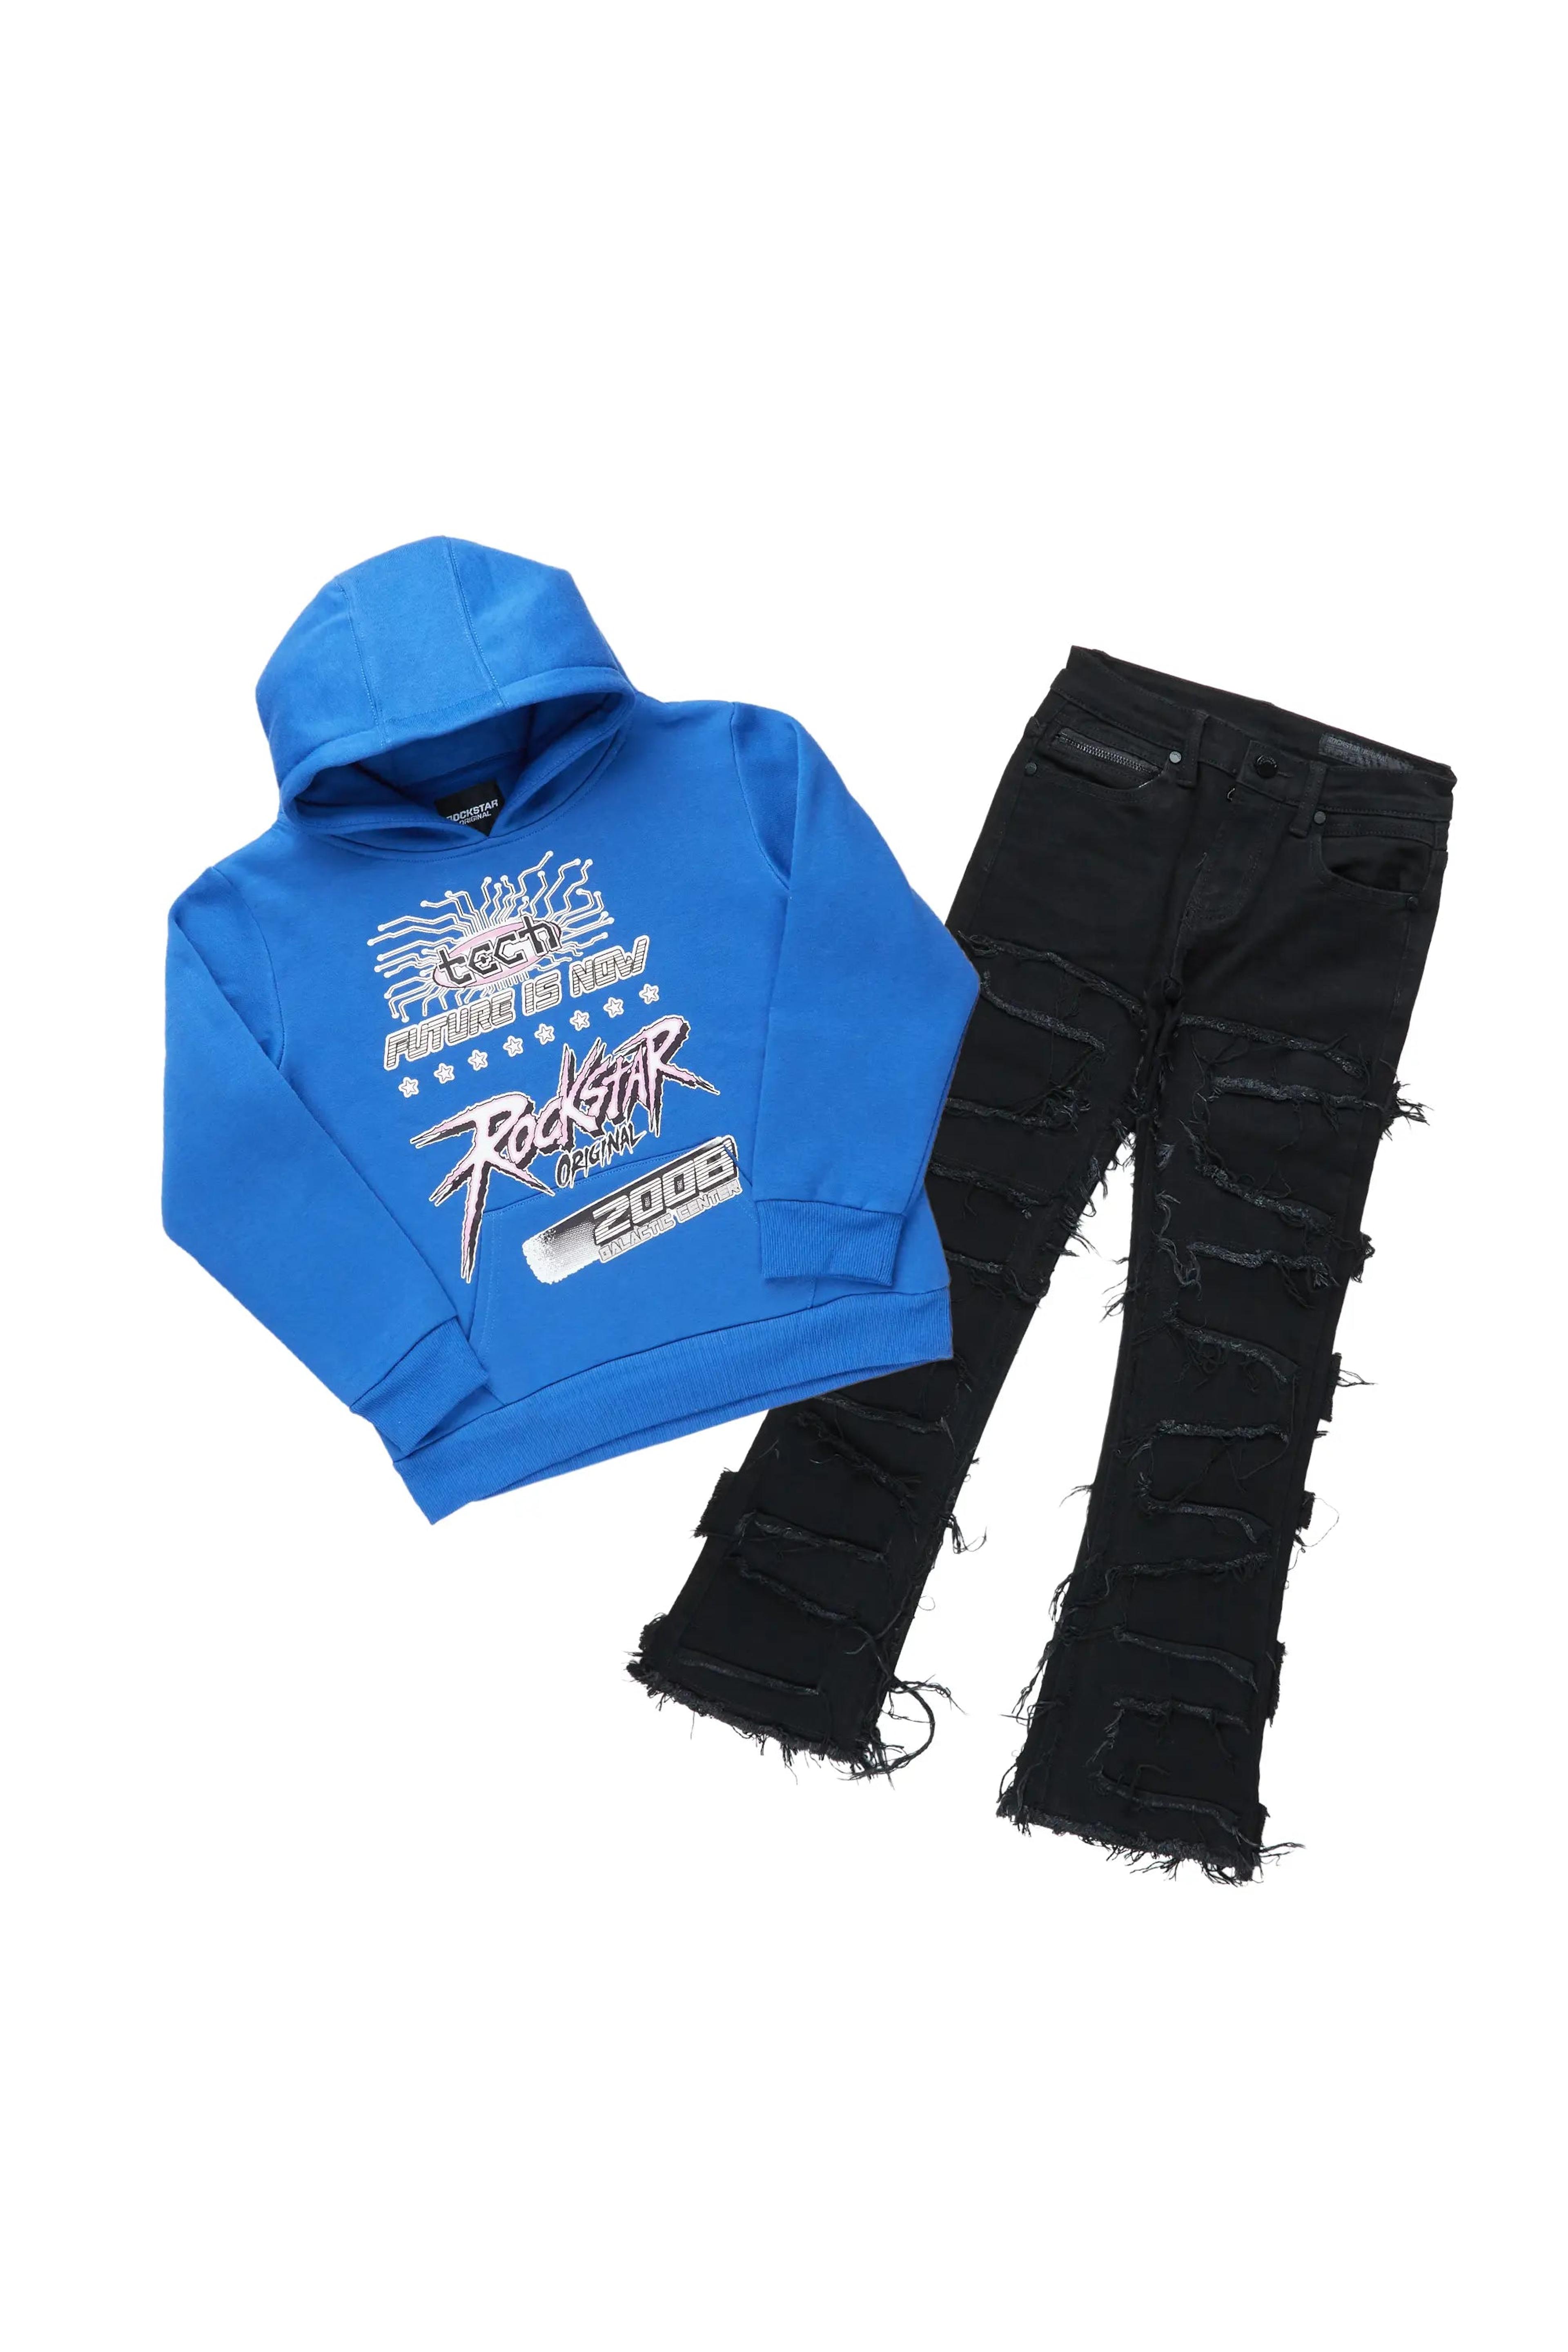 Boys Eduardo Royal Blue Hoodie/Black Stacked Jean Set